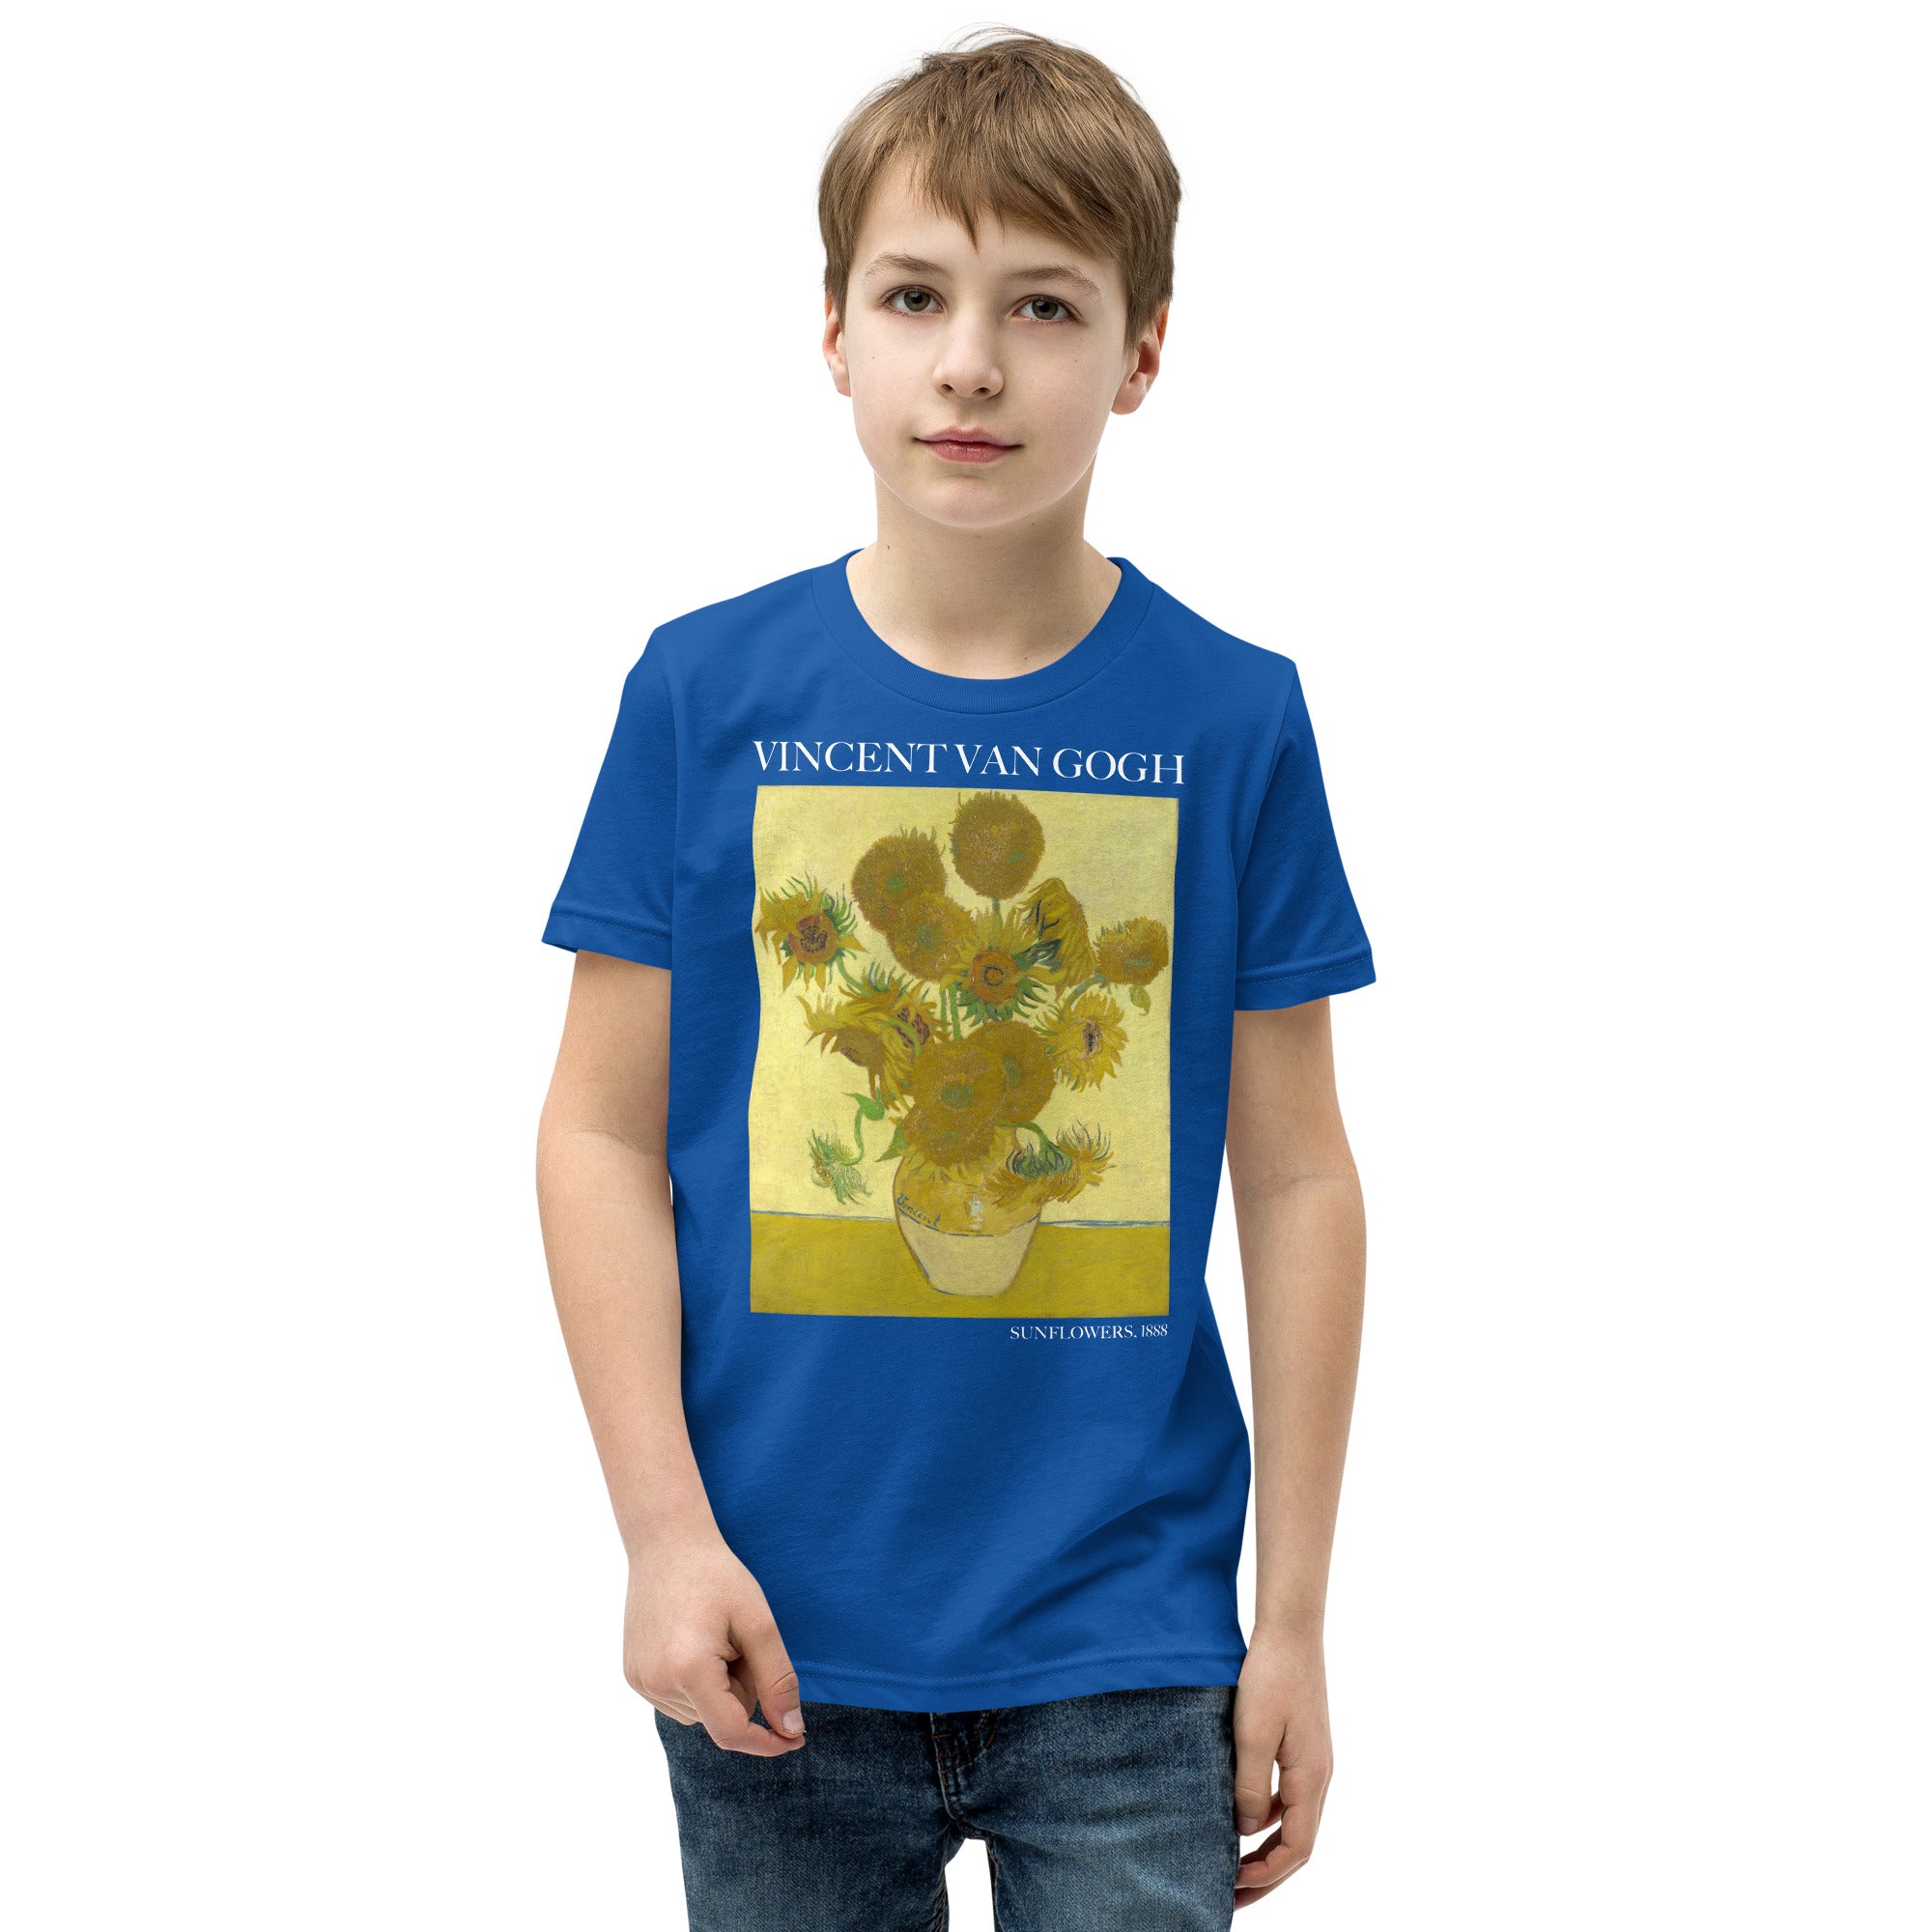 Vincent van Gogh 'Sunflowers' Famous Painting Short Sleeve T-Shirt | Premium Youth Art Tee